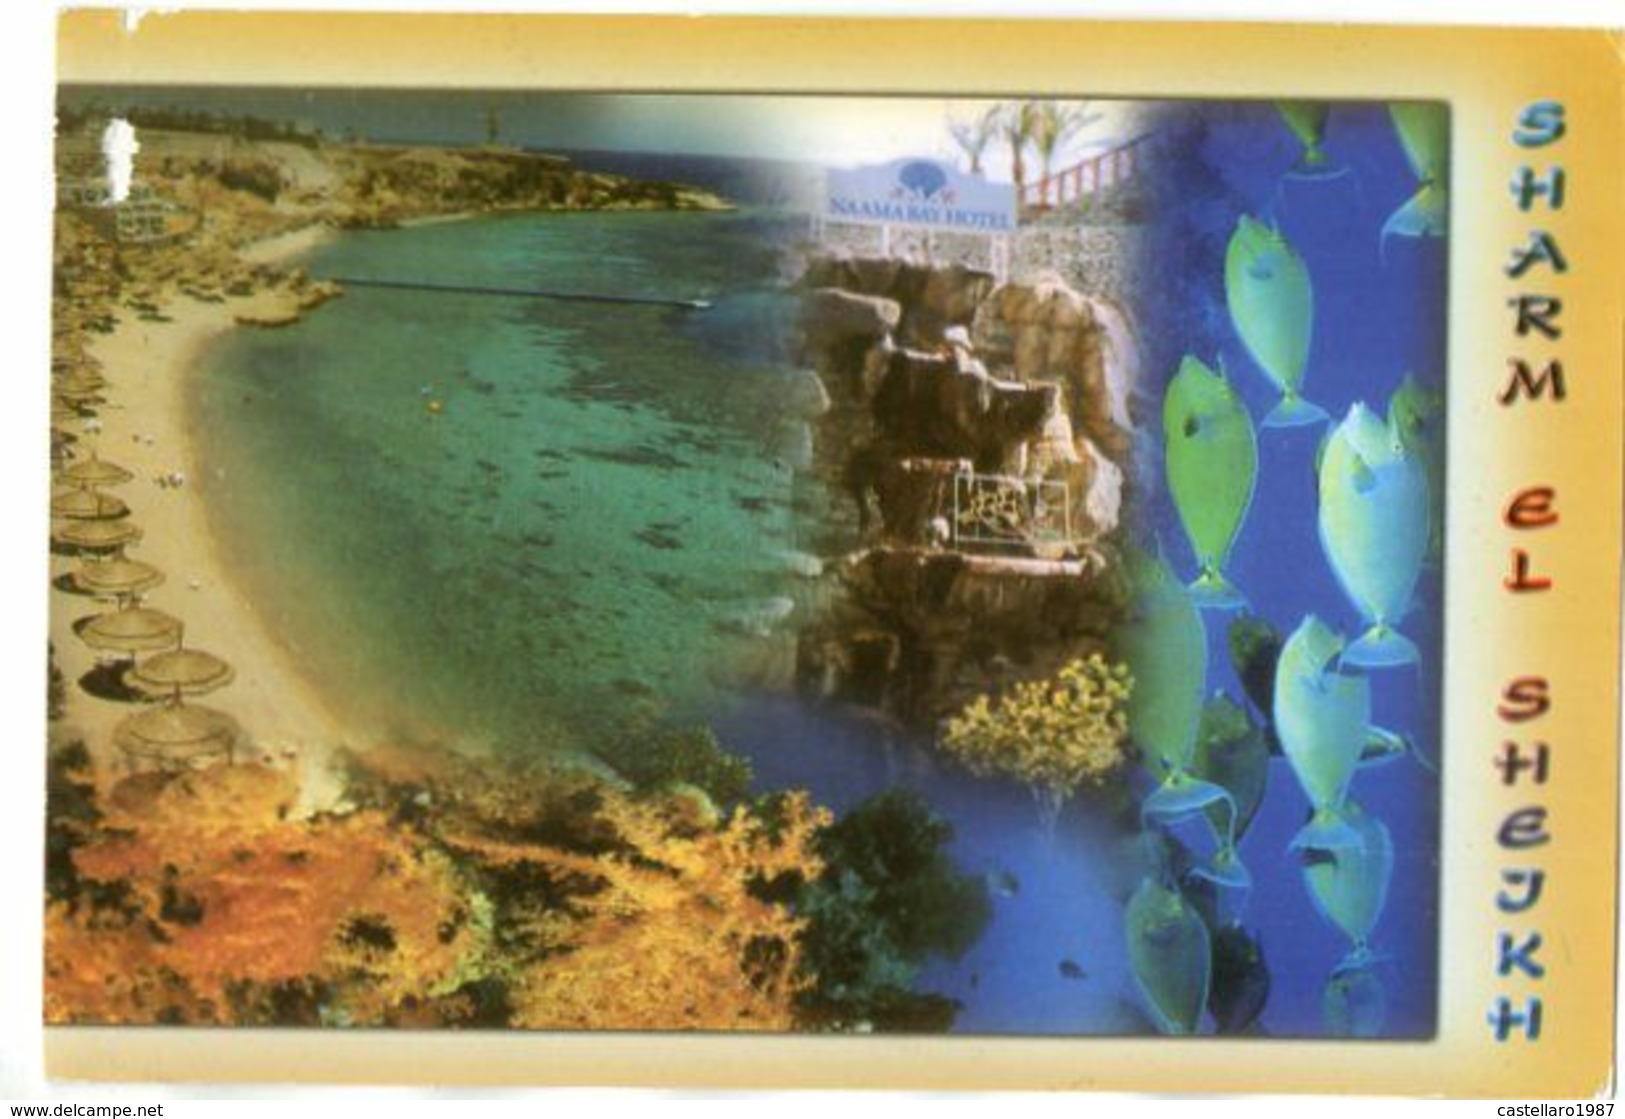 SHARM EL SHEIKH - POST CARD - EGYPT- Cm. 11 X 16 - Sharm El Sheikh